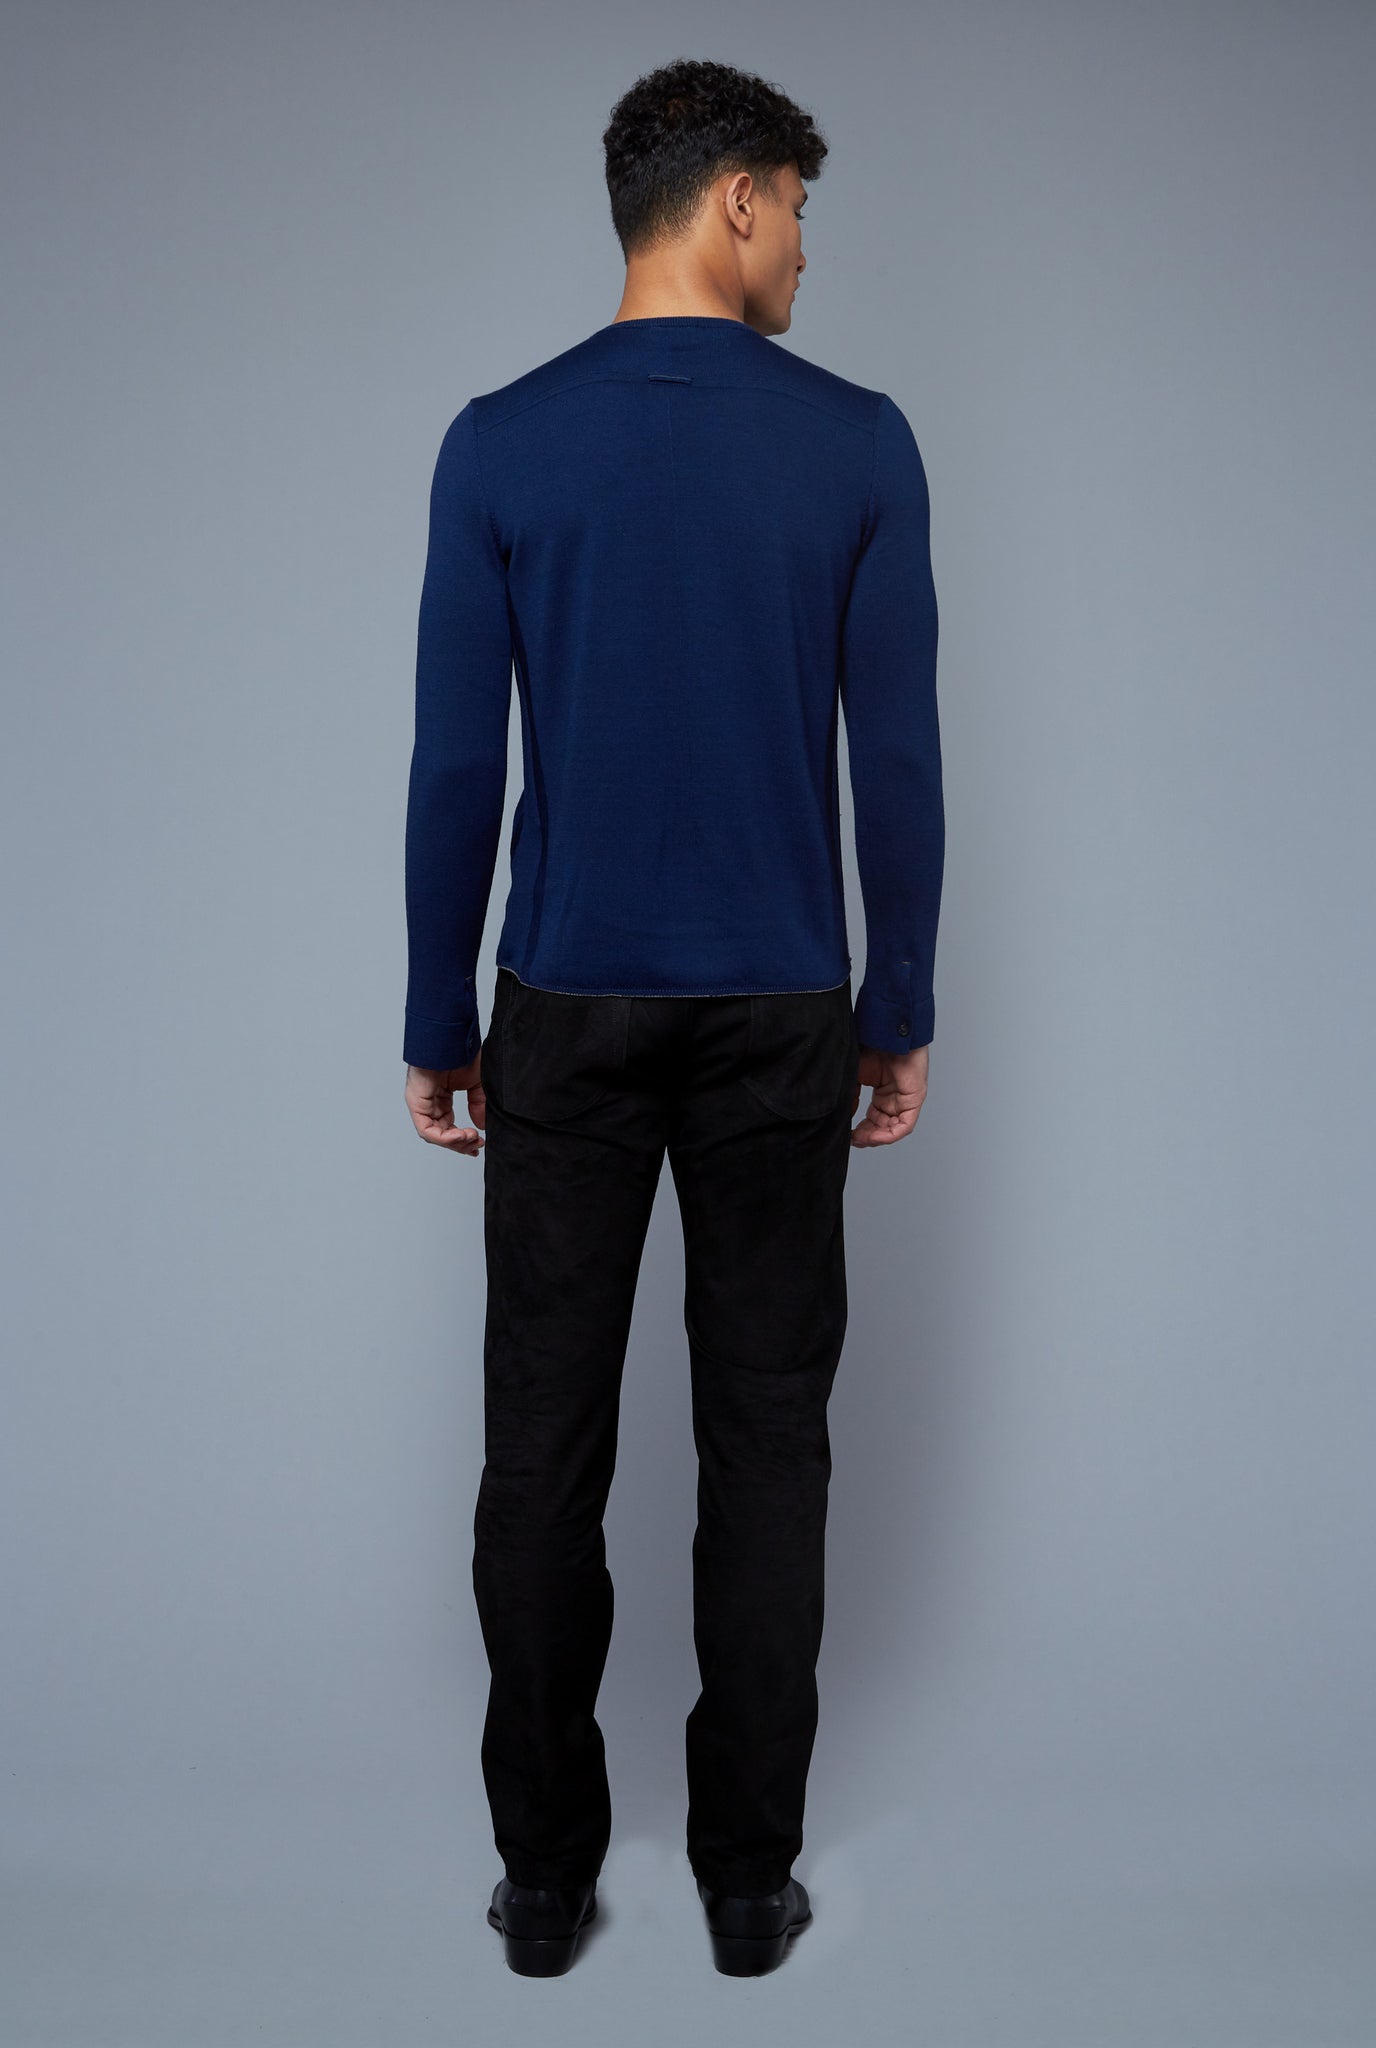 Back View: Model Tre Boutilier wearing Long Sleeve Sweater Tee